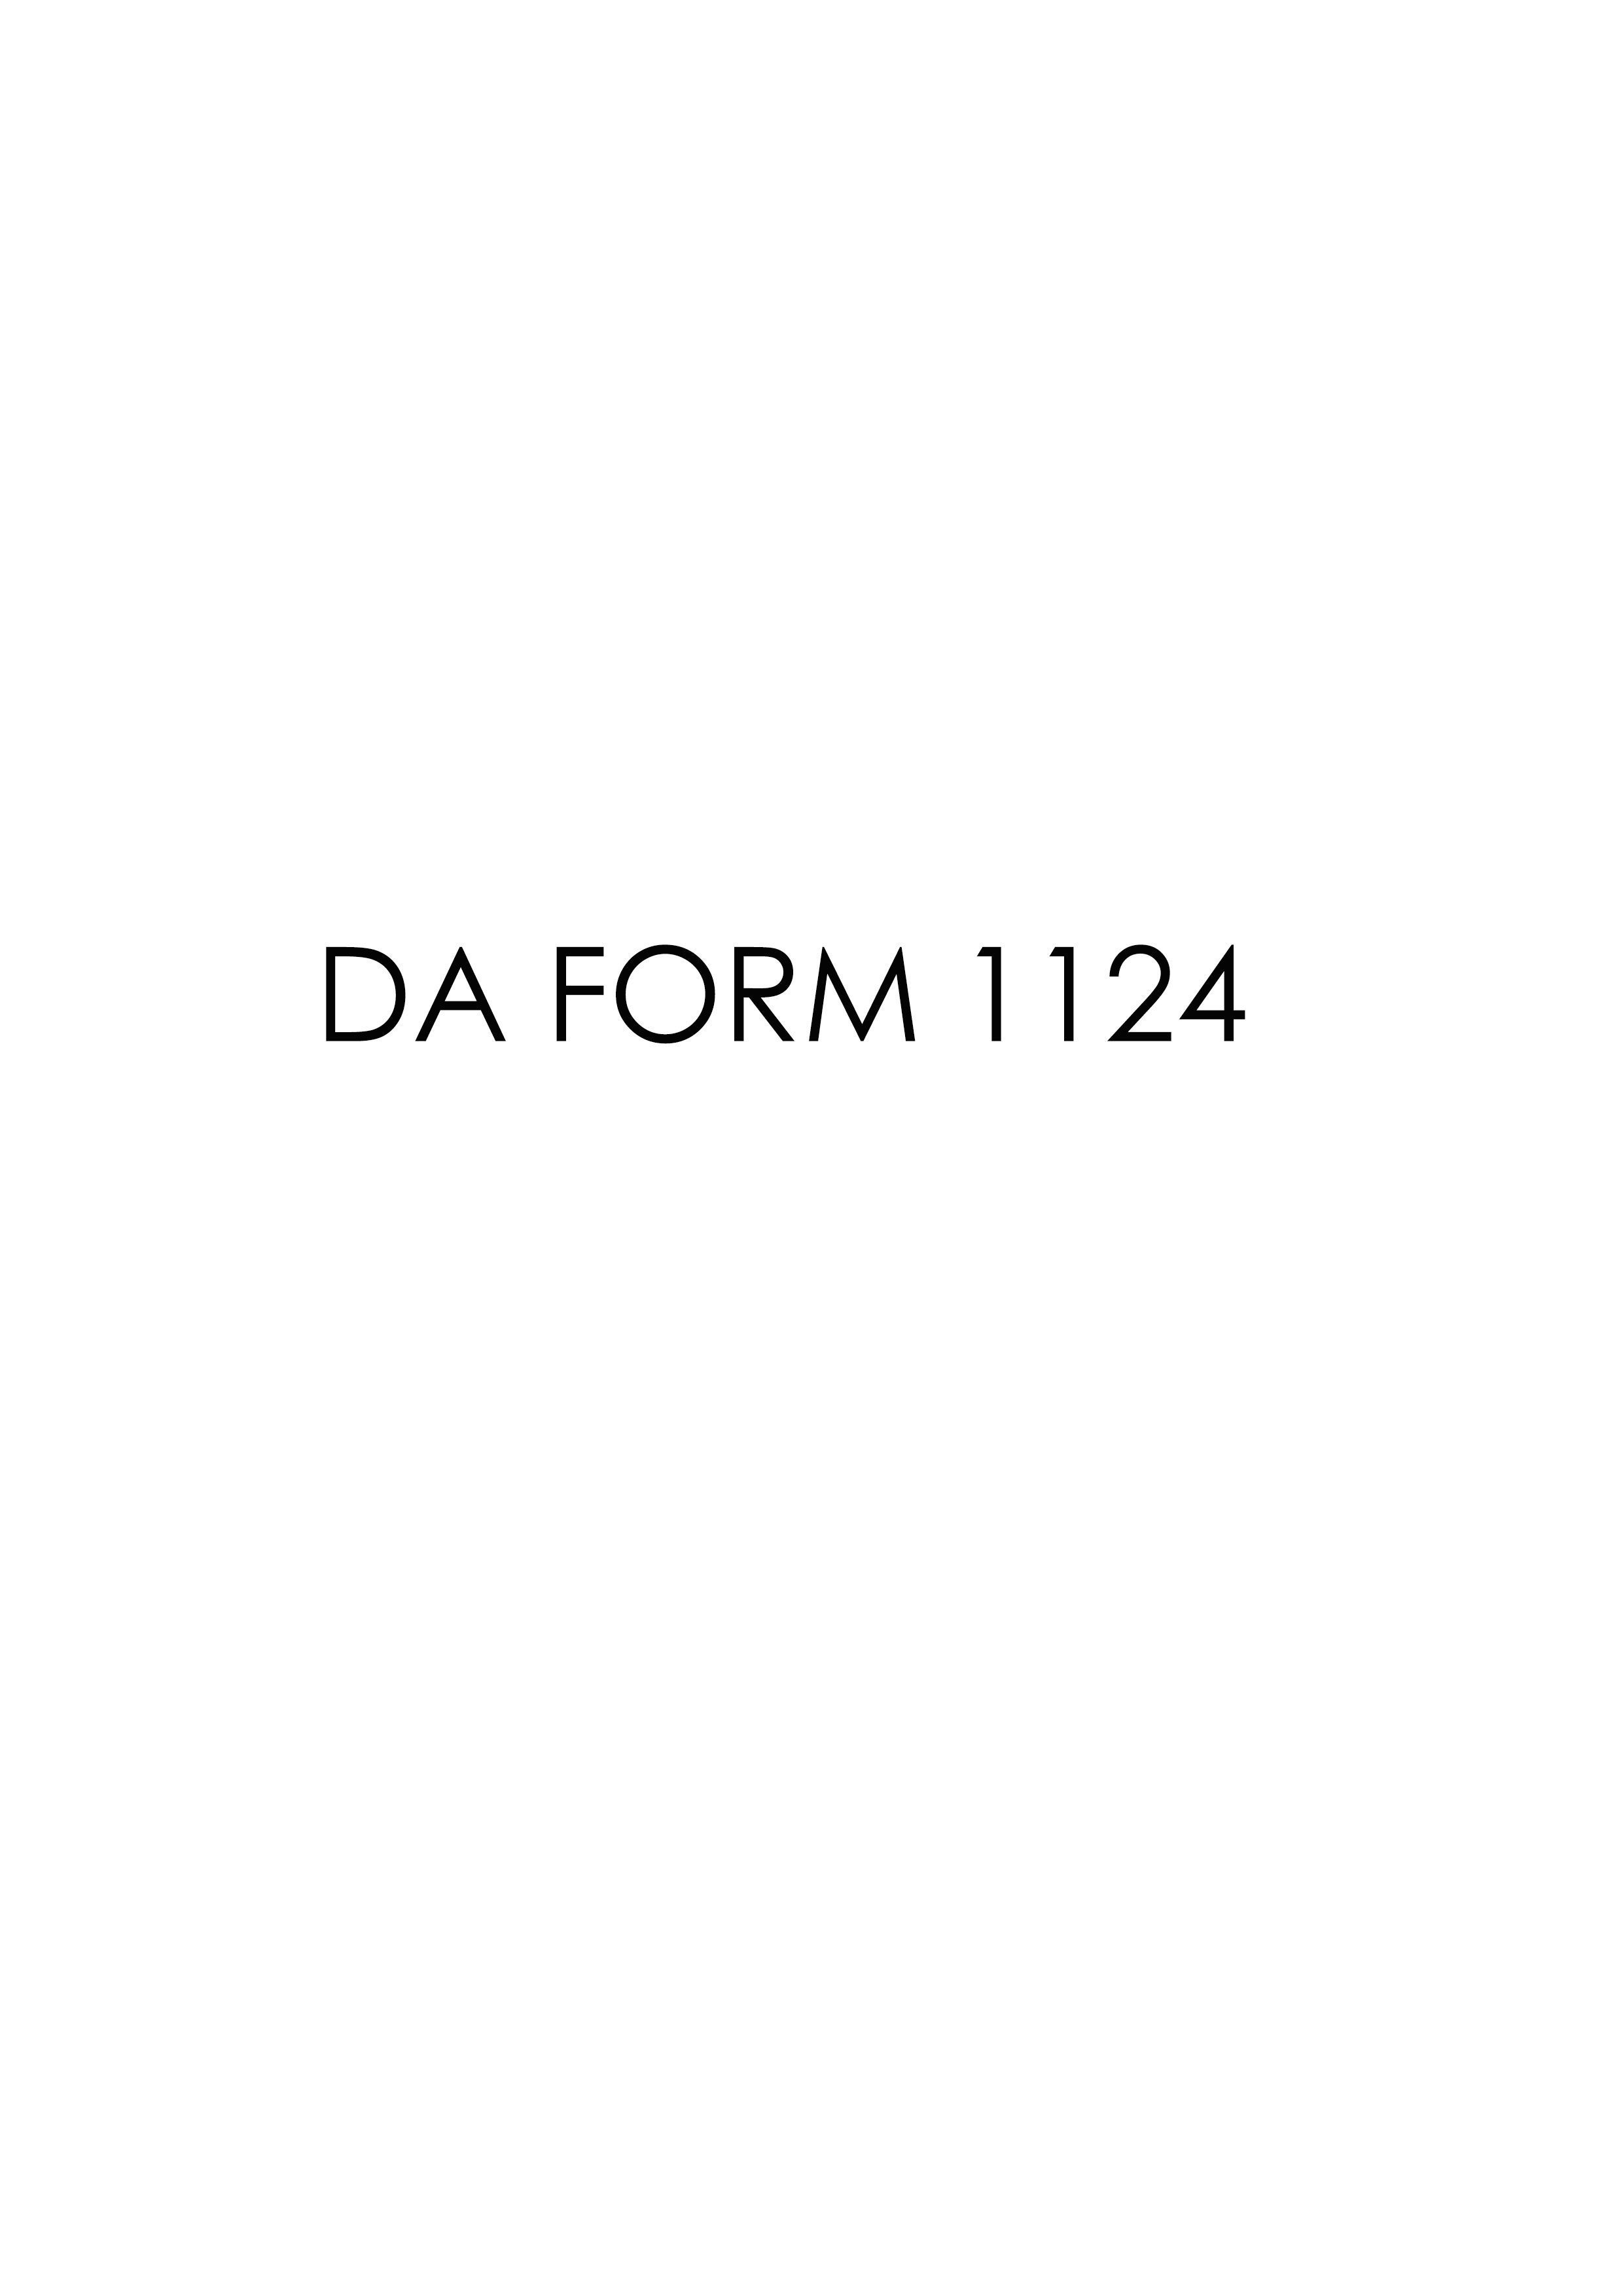 Download Fillable da Form 1124